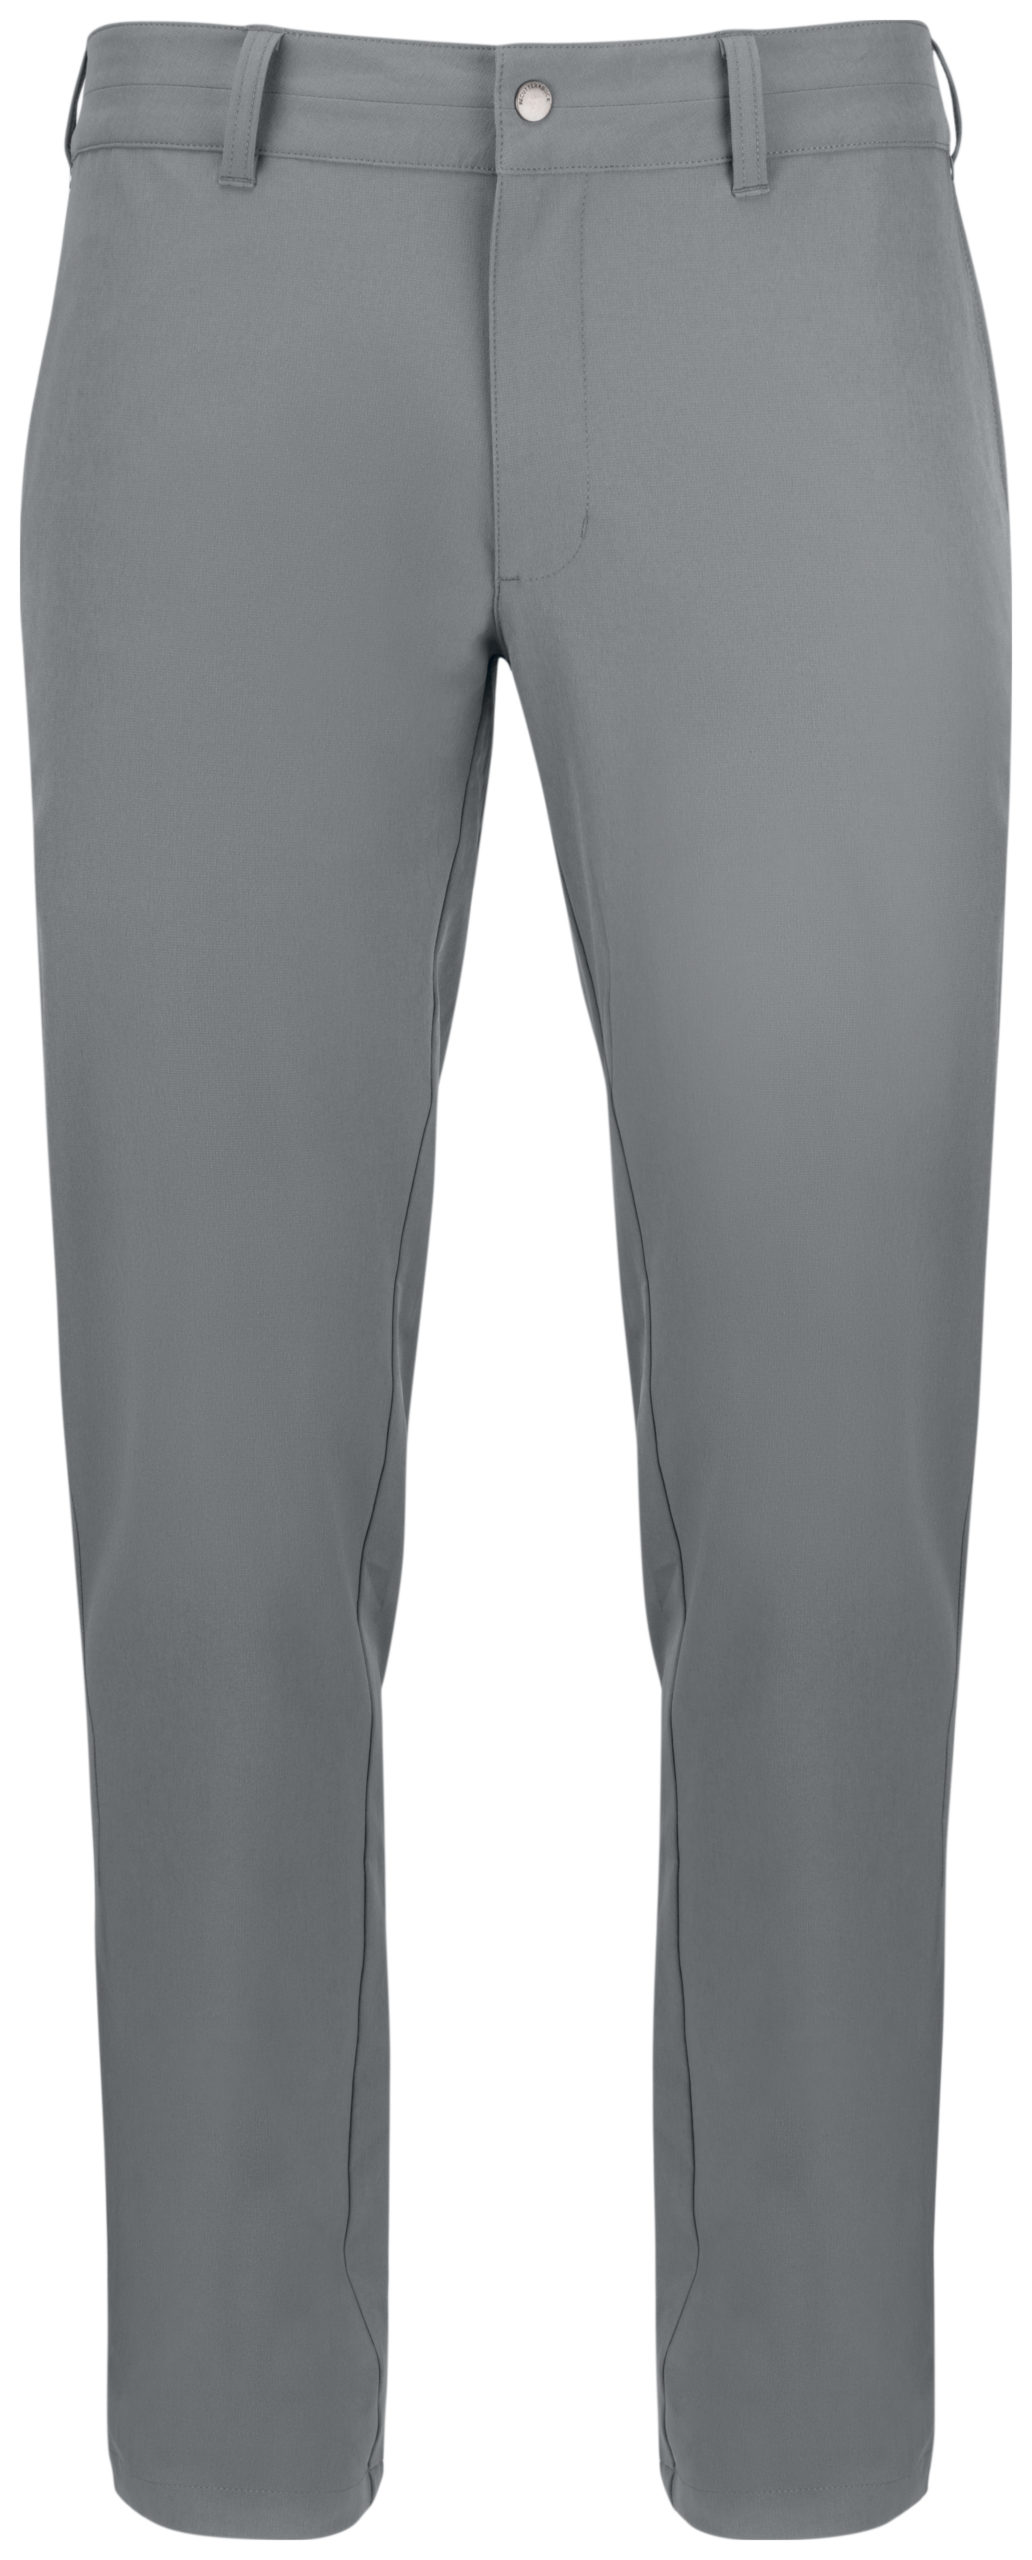 Cutterandbuck New Salish Pants Grey